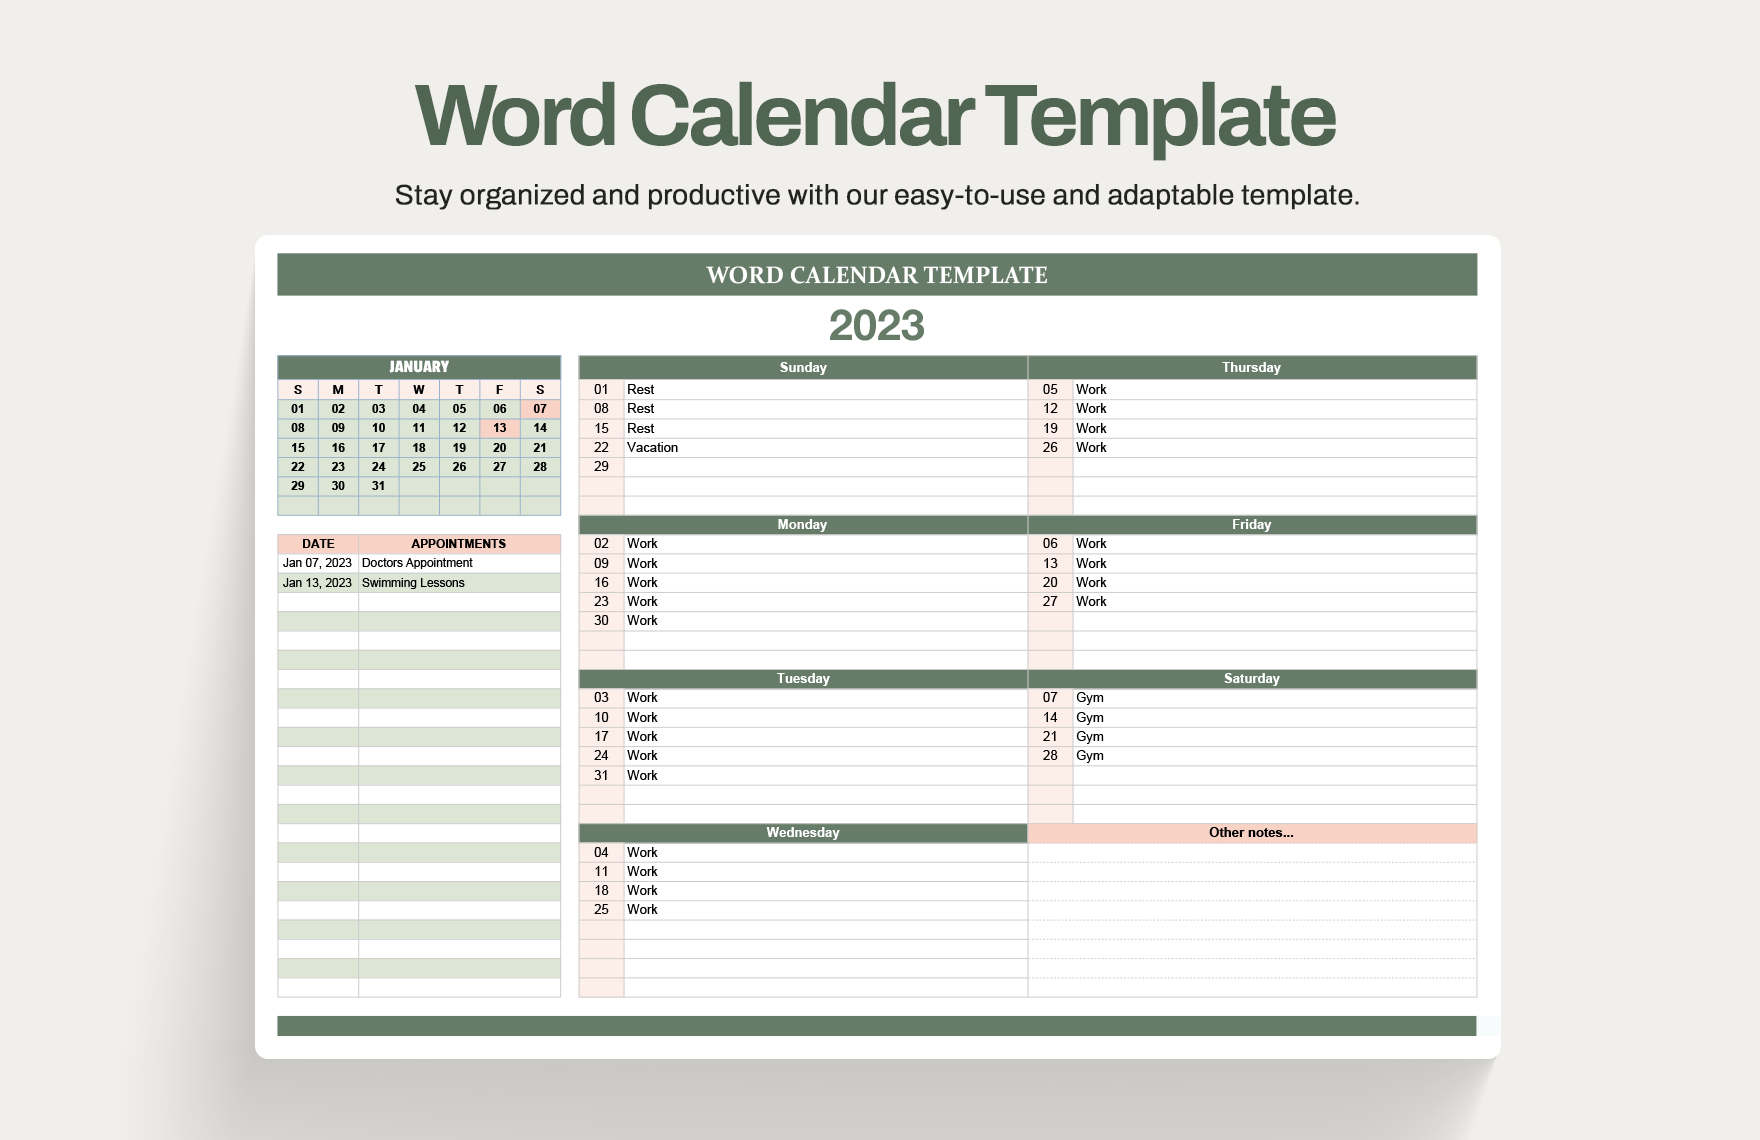 Word Calendar Template Download in Excel, Google Sheets